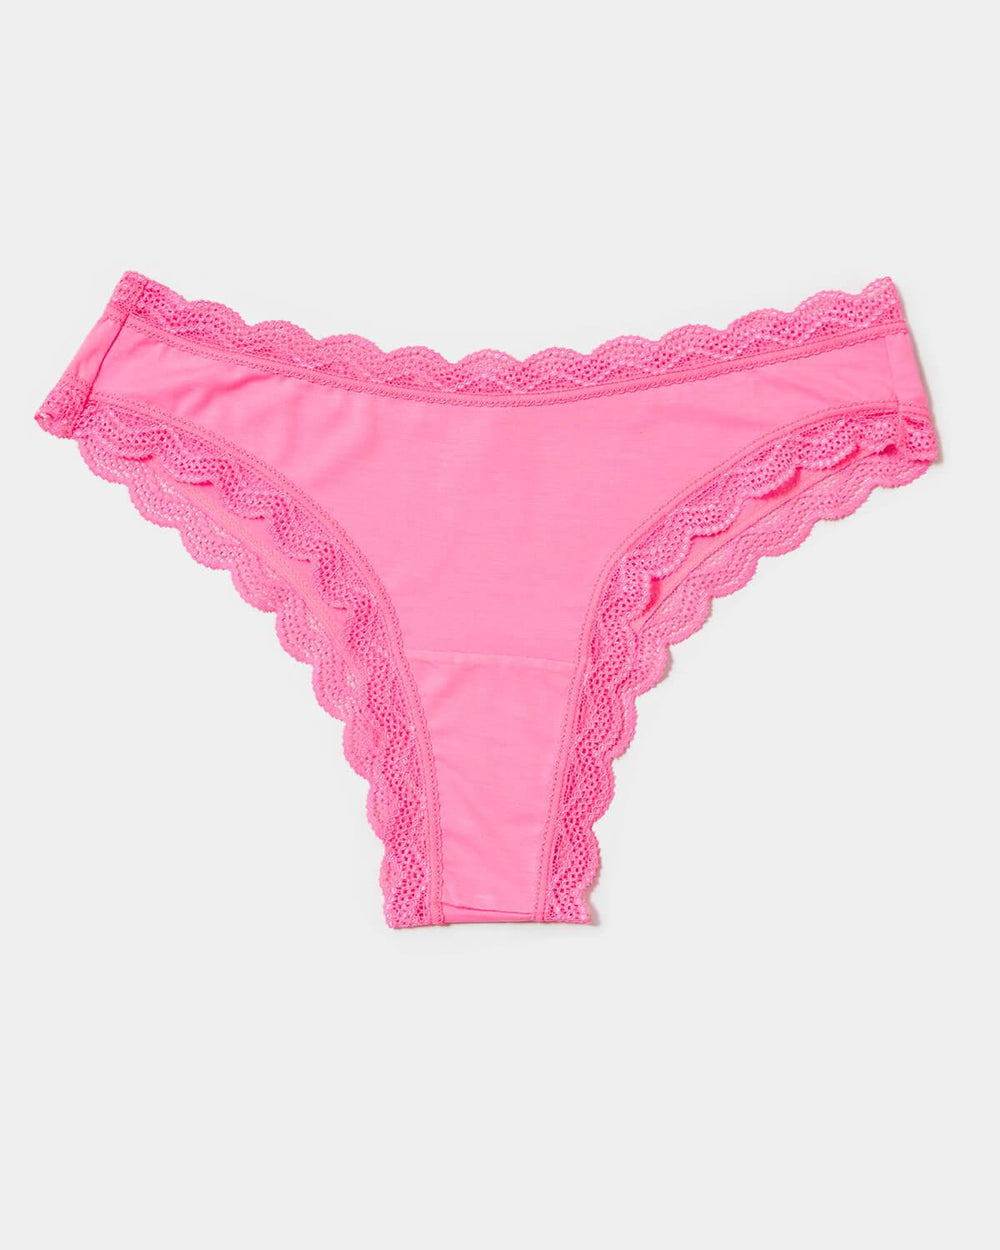 The Original Brief - Hot Pink  Sustainable TENCEL™ Lace Underwear